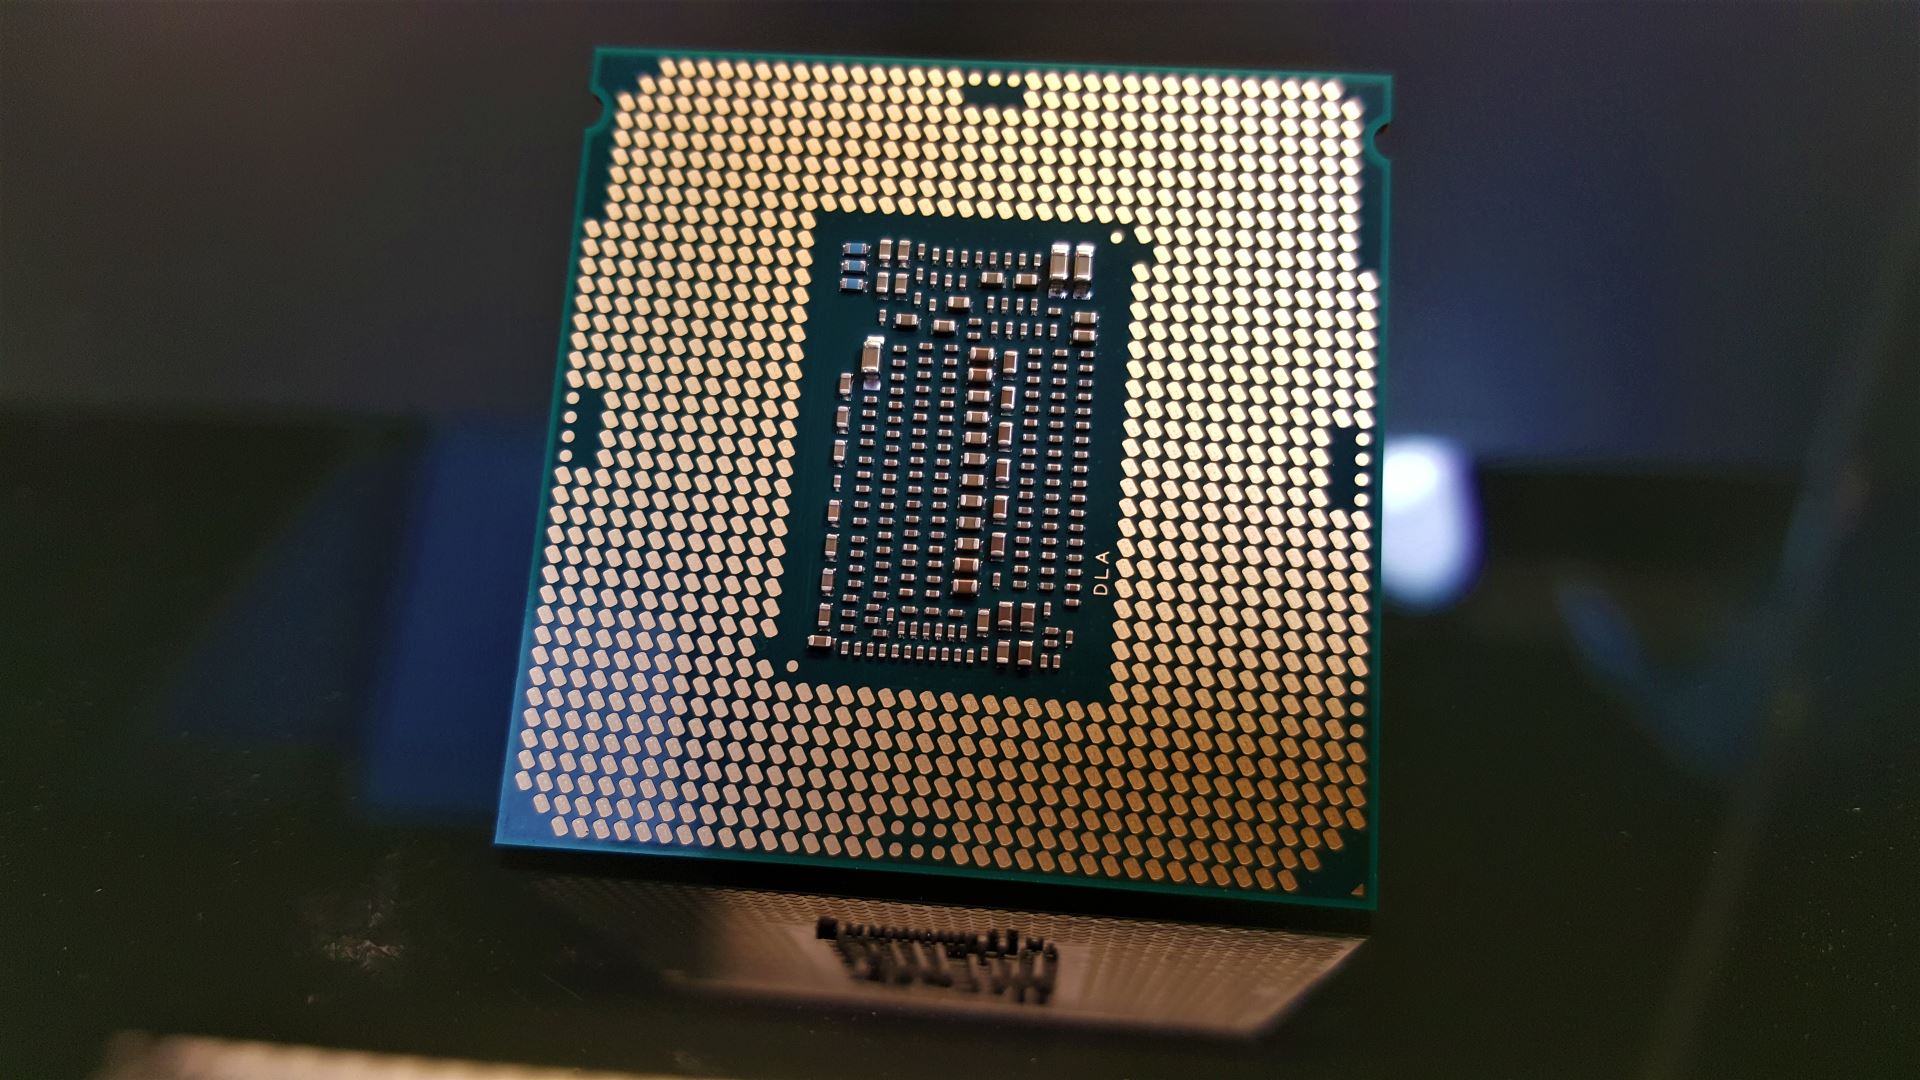 Intel Core i9 13900K specs possibly revealed via Geekbench